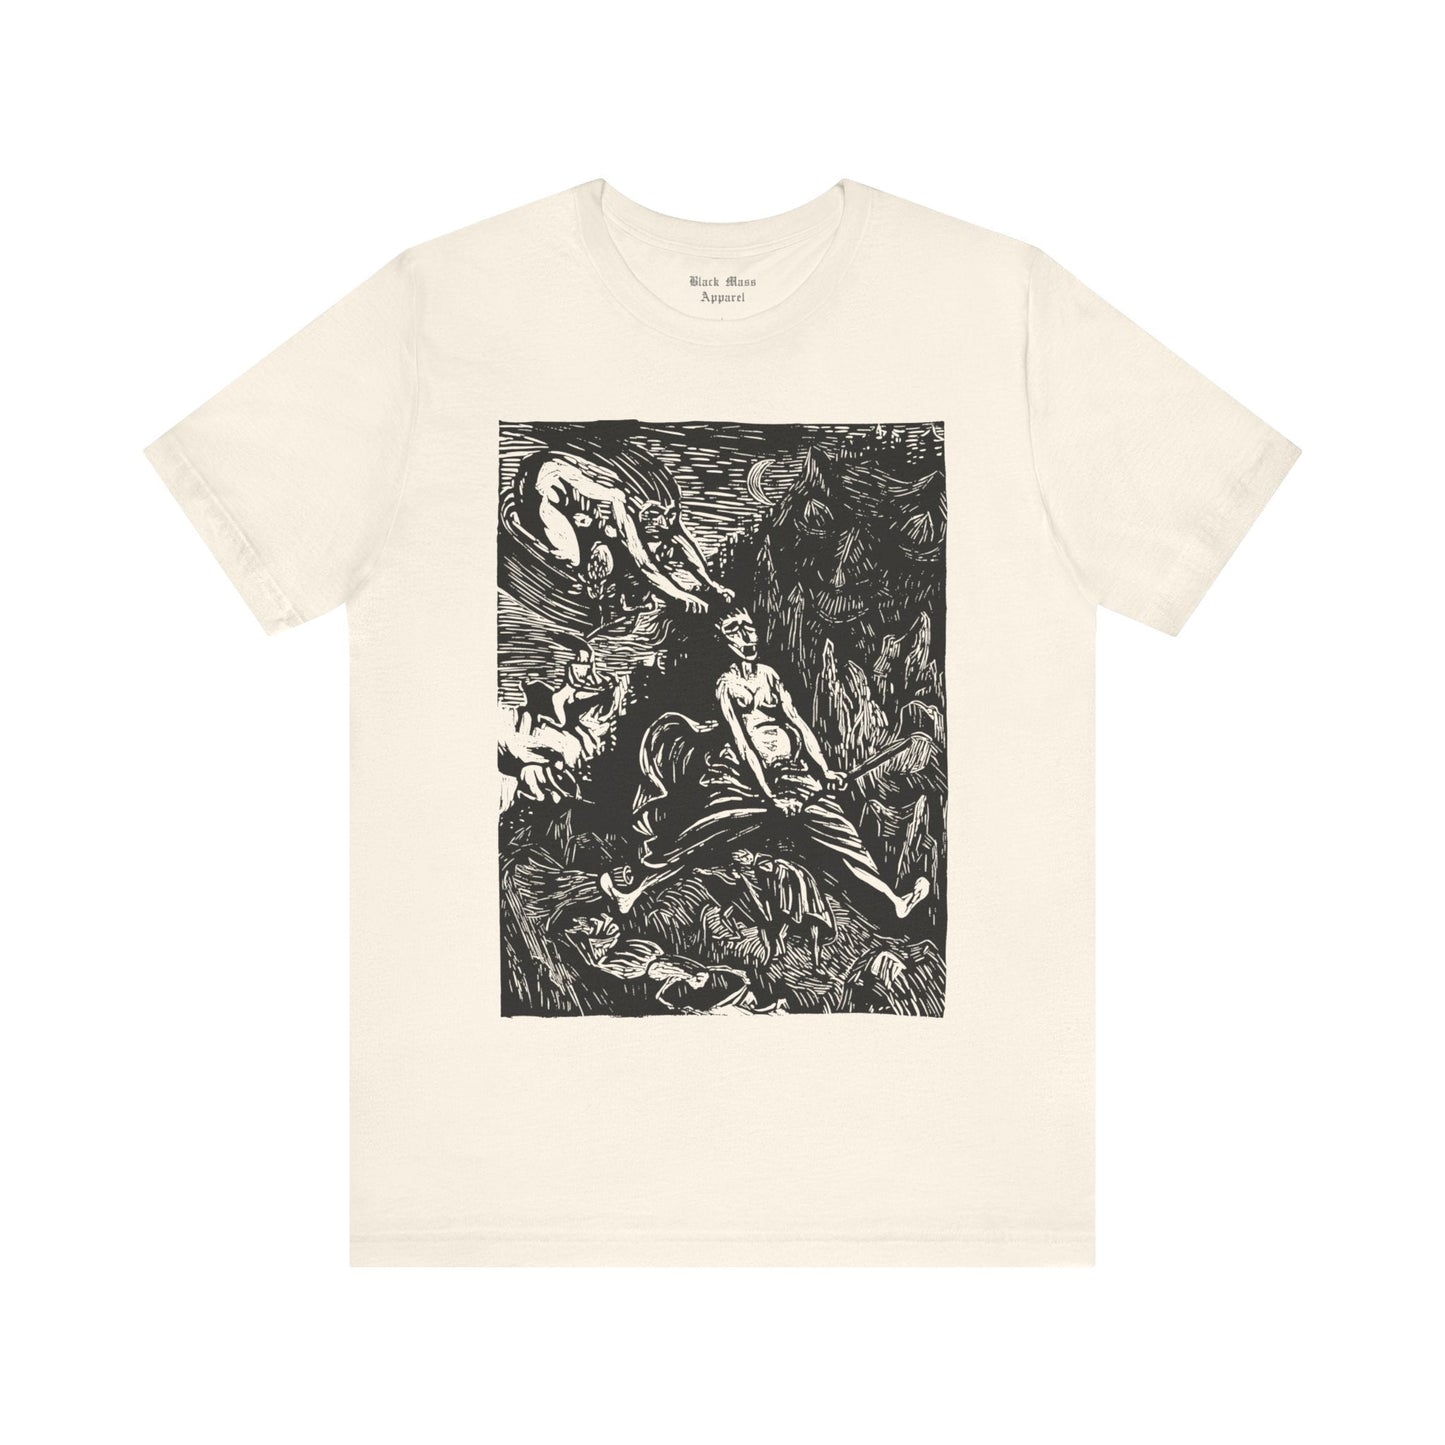 Hexenritt, Ernst Barlach Art, Vintage Occult Shirt, Witchcraft T-shirt, Magic, Creepy Art, Witchy Gothic Unisex Jersey Short Sleeve Tee - Black Mass Apparel - T-Shirt